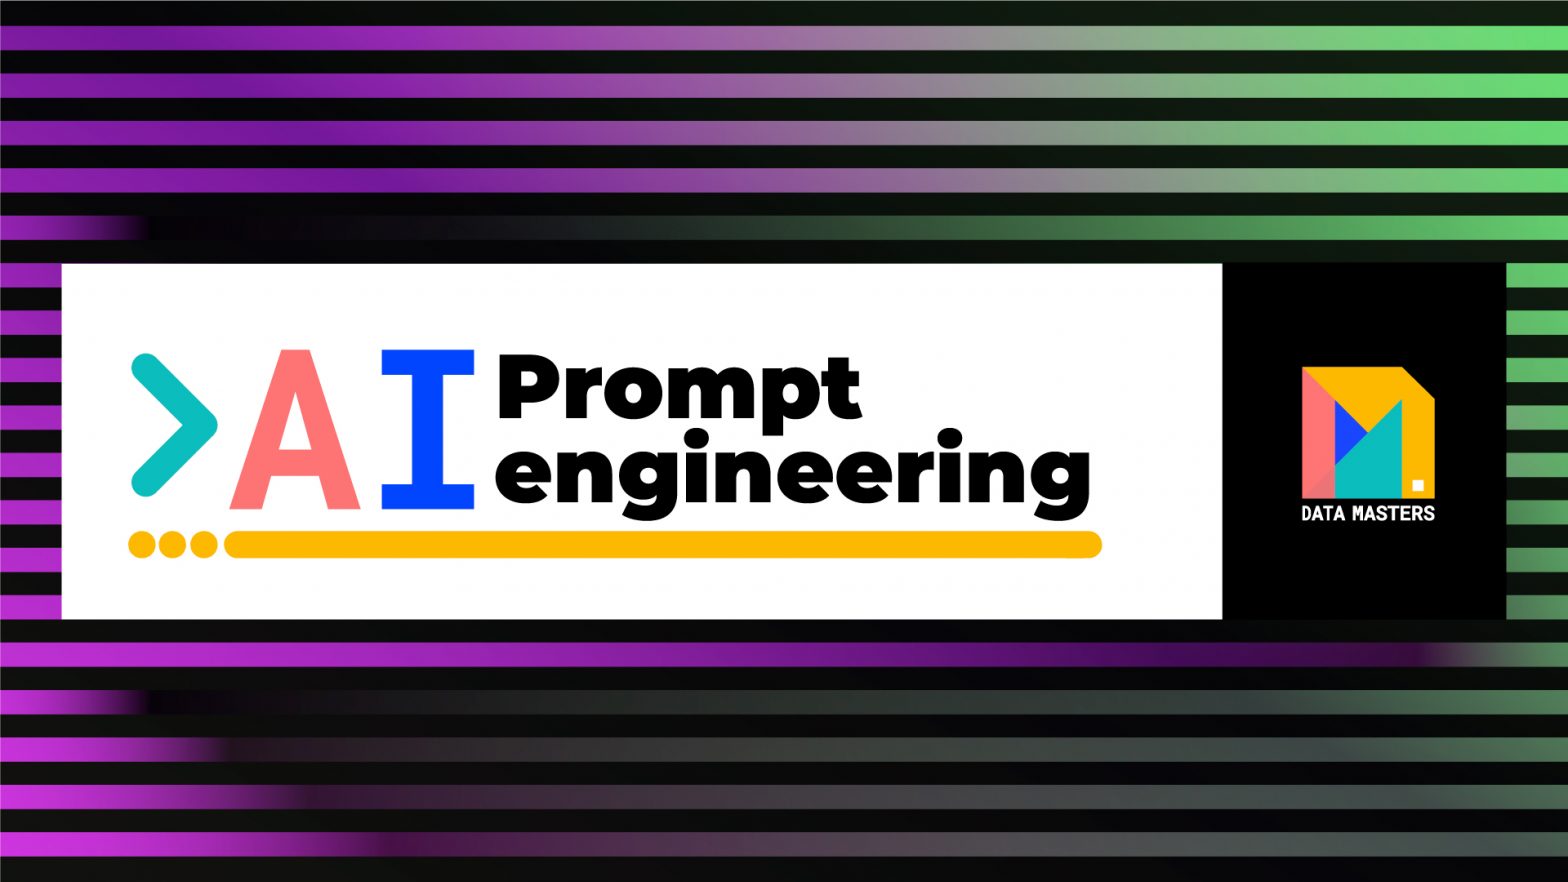 AI Prompt Engineering